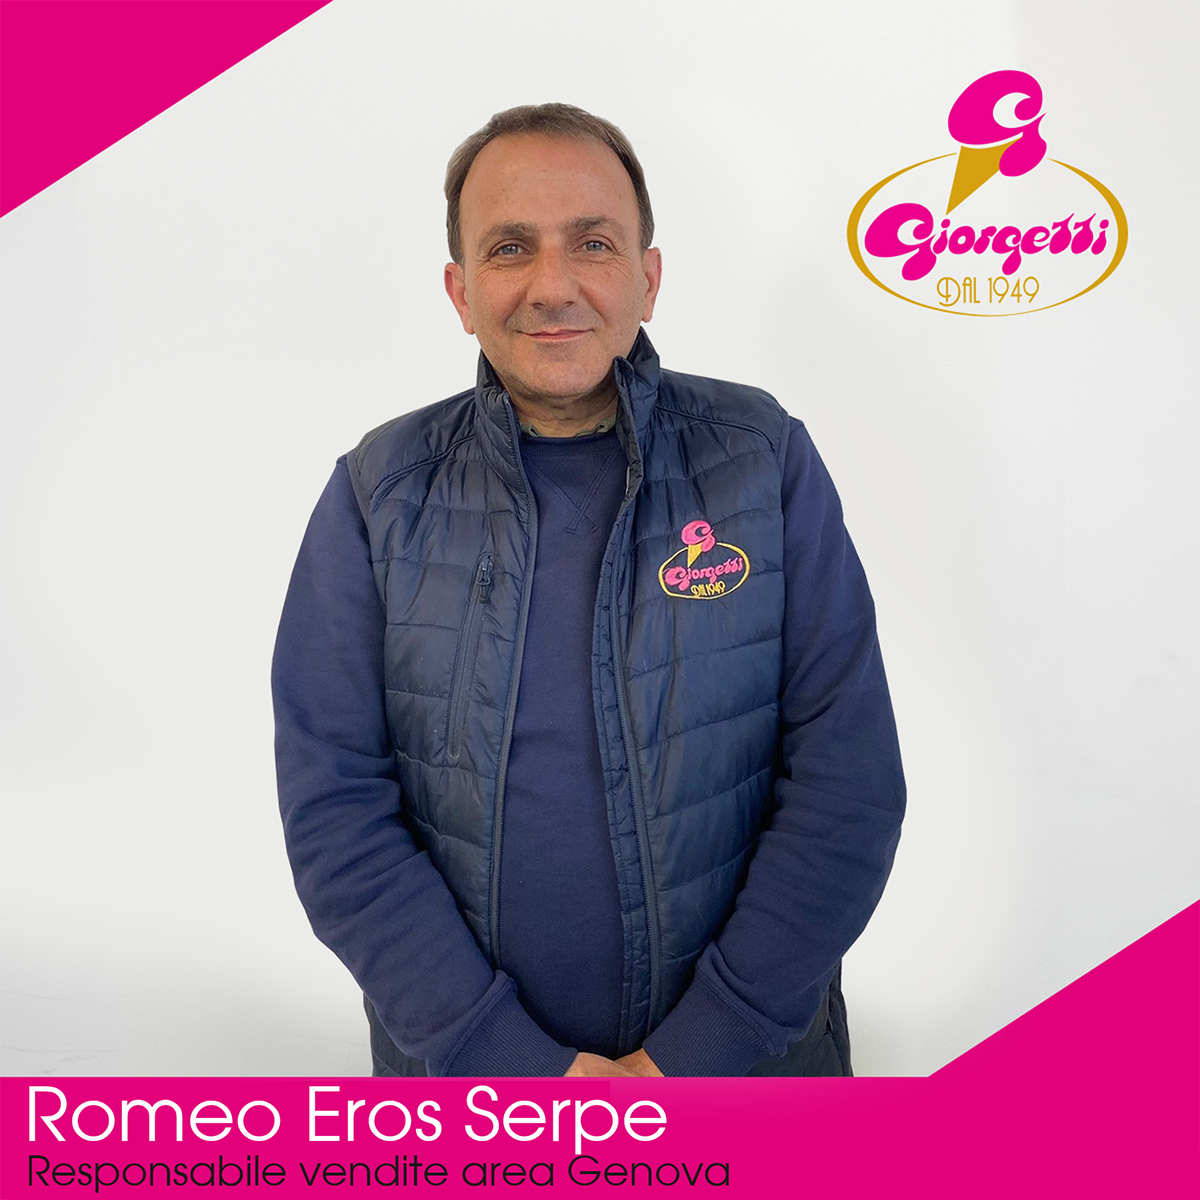 Romeo Eros Serpe